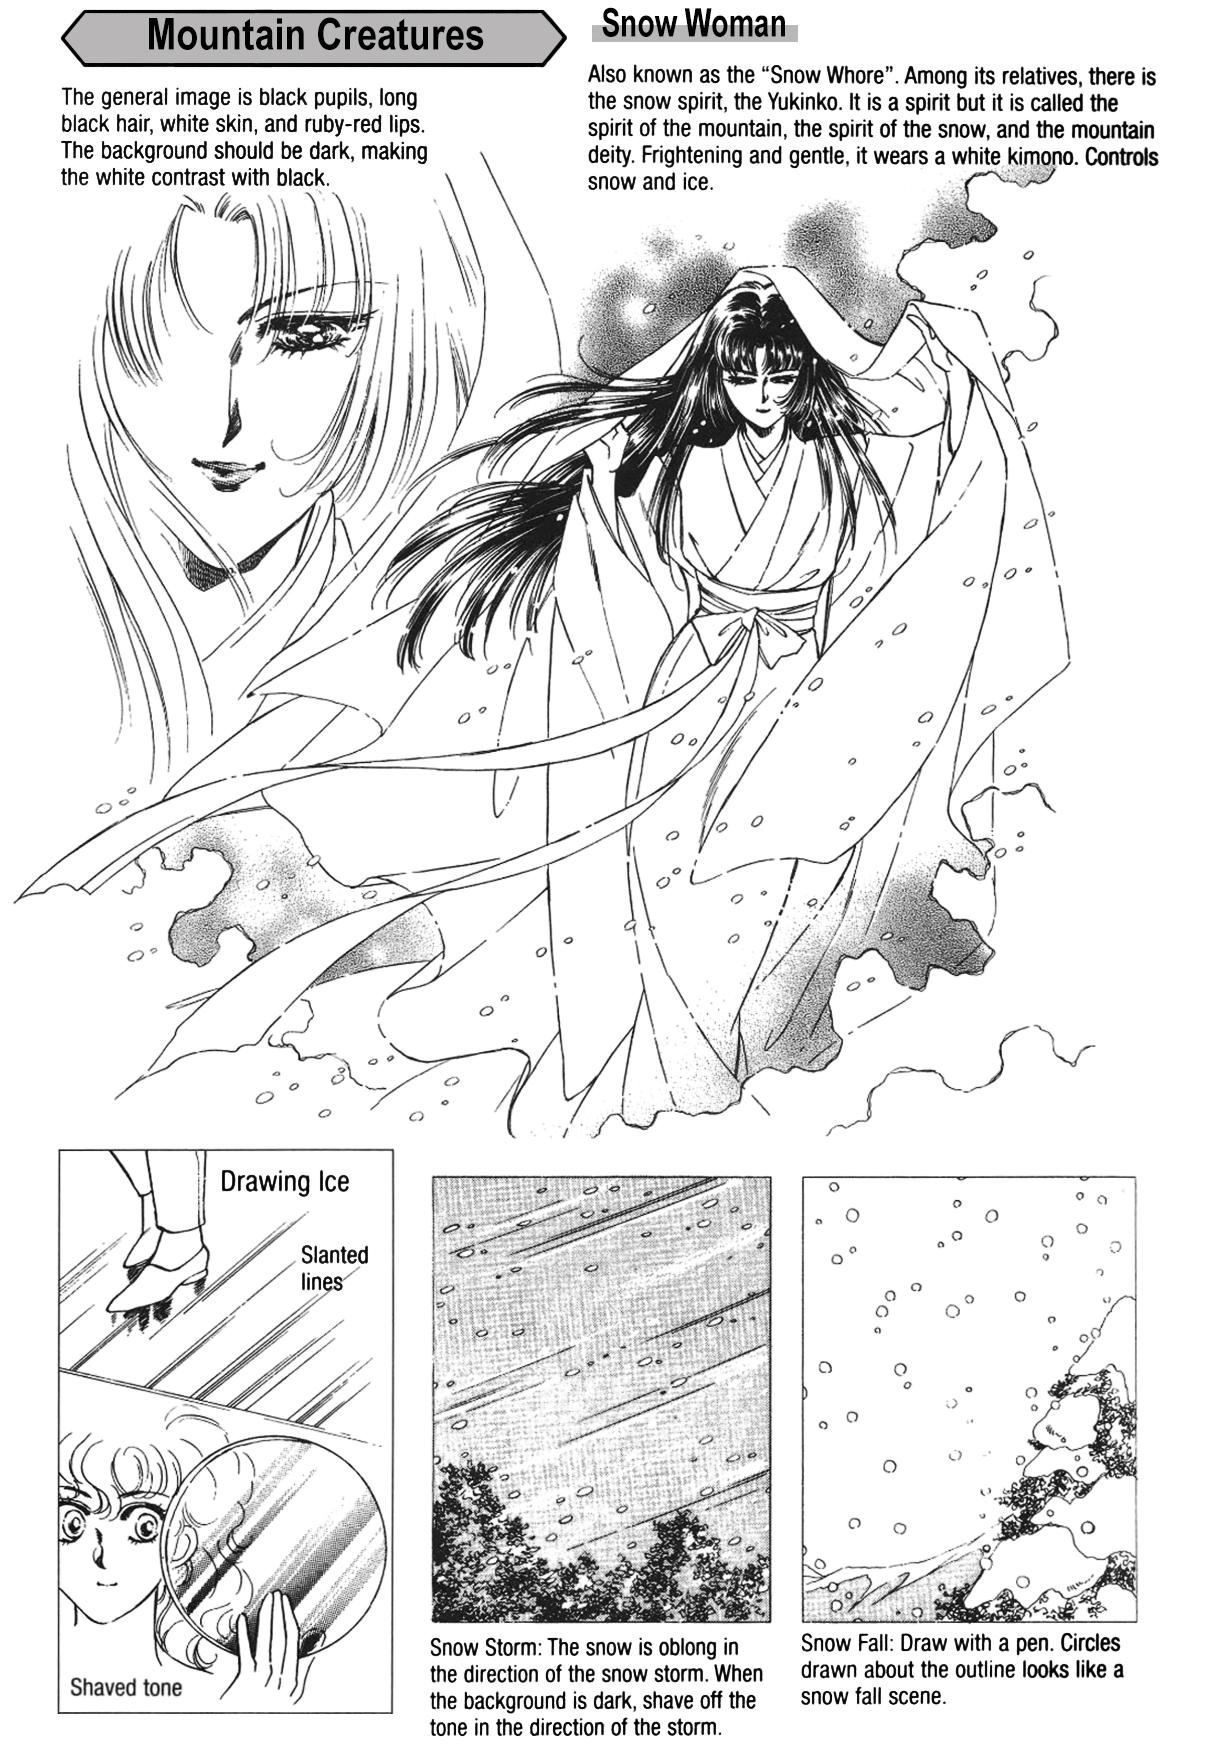 How to Draw Manga Vol. 24, Occult & Horror by Hikaru Hayashi 65